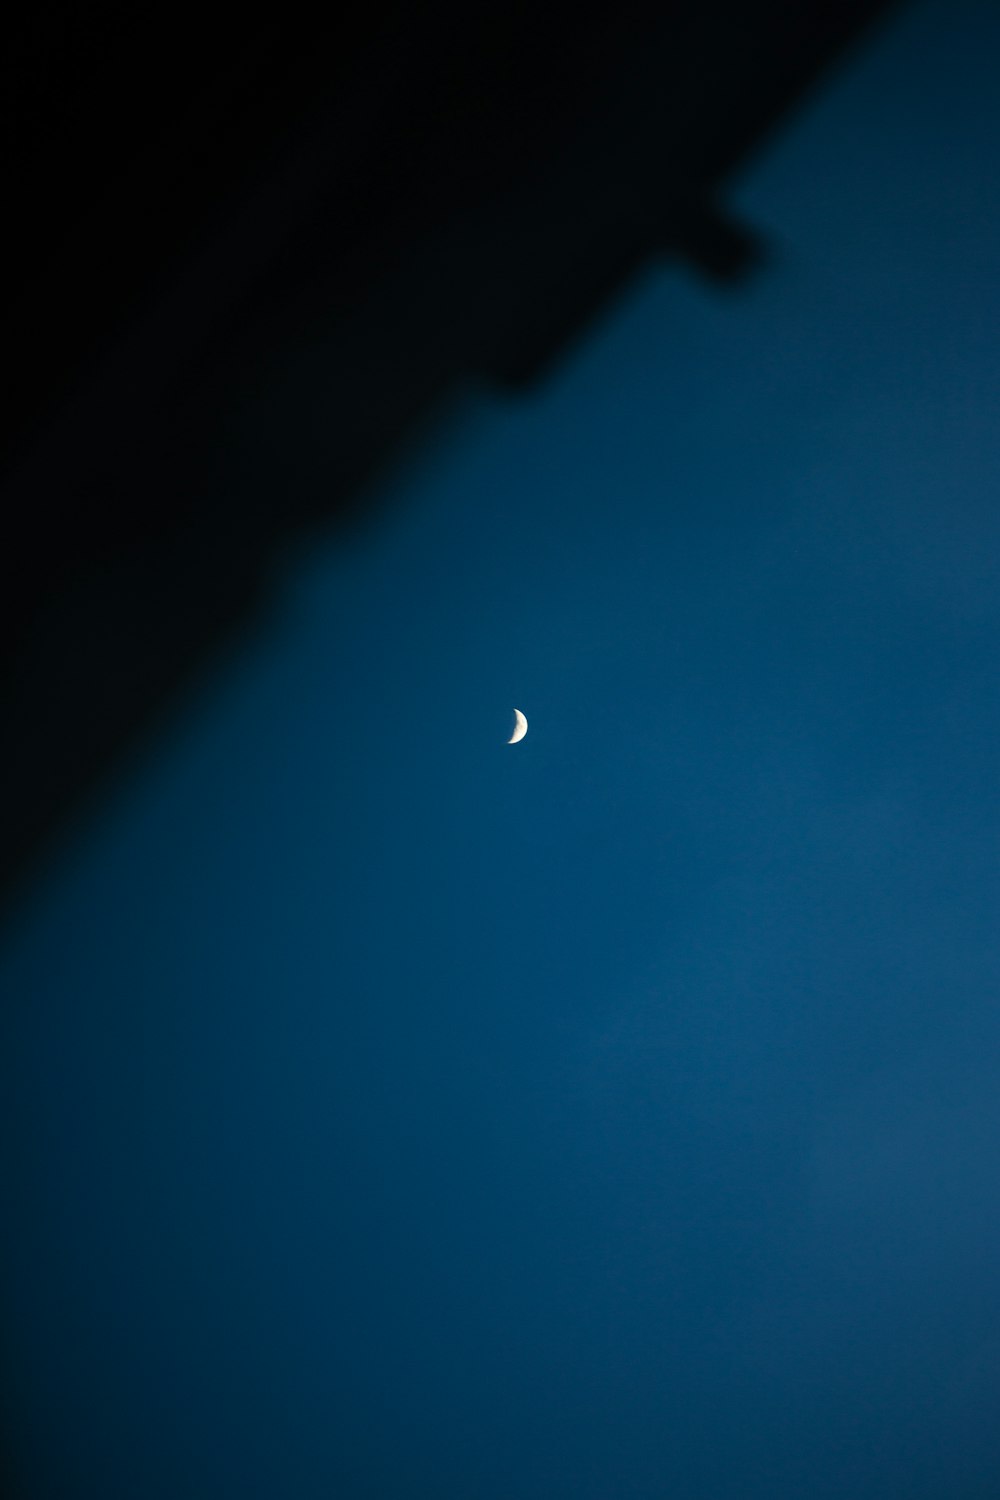 a half moon is seen in the dark blue sky